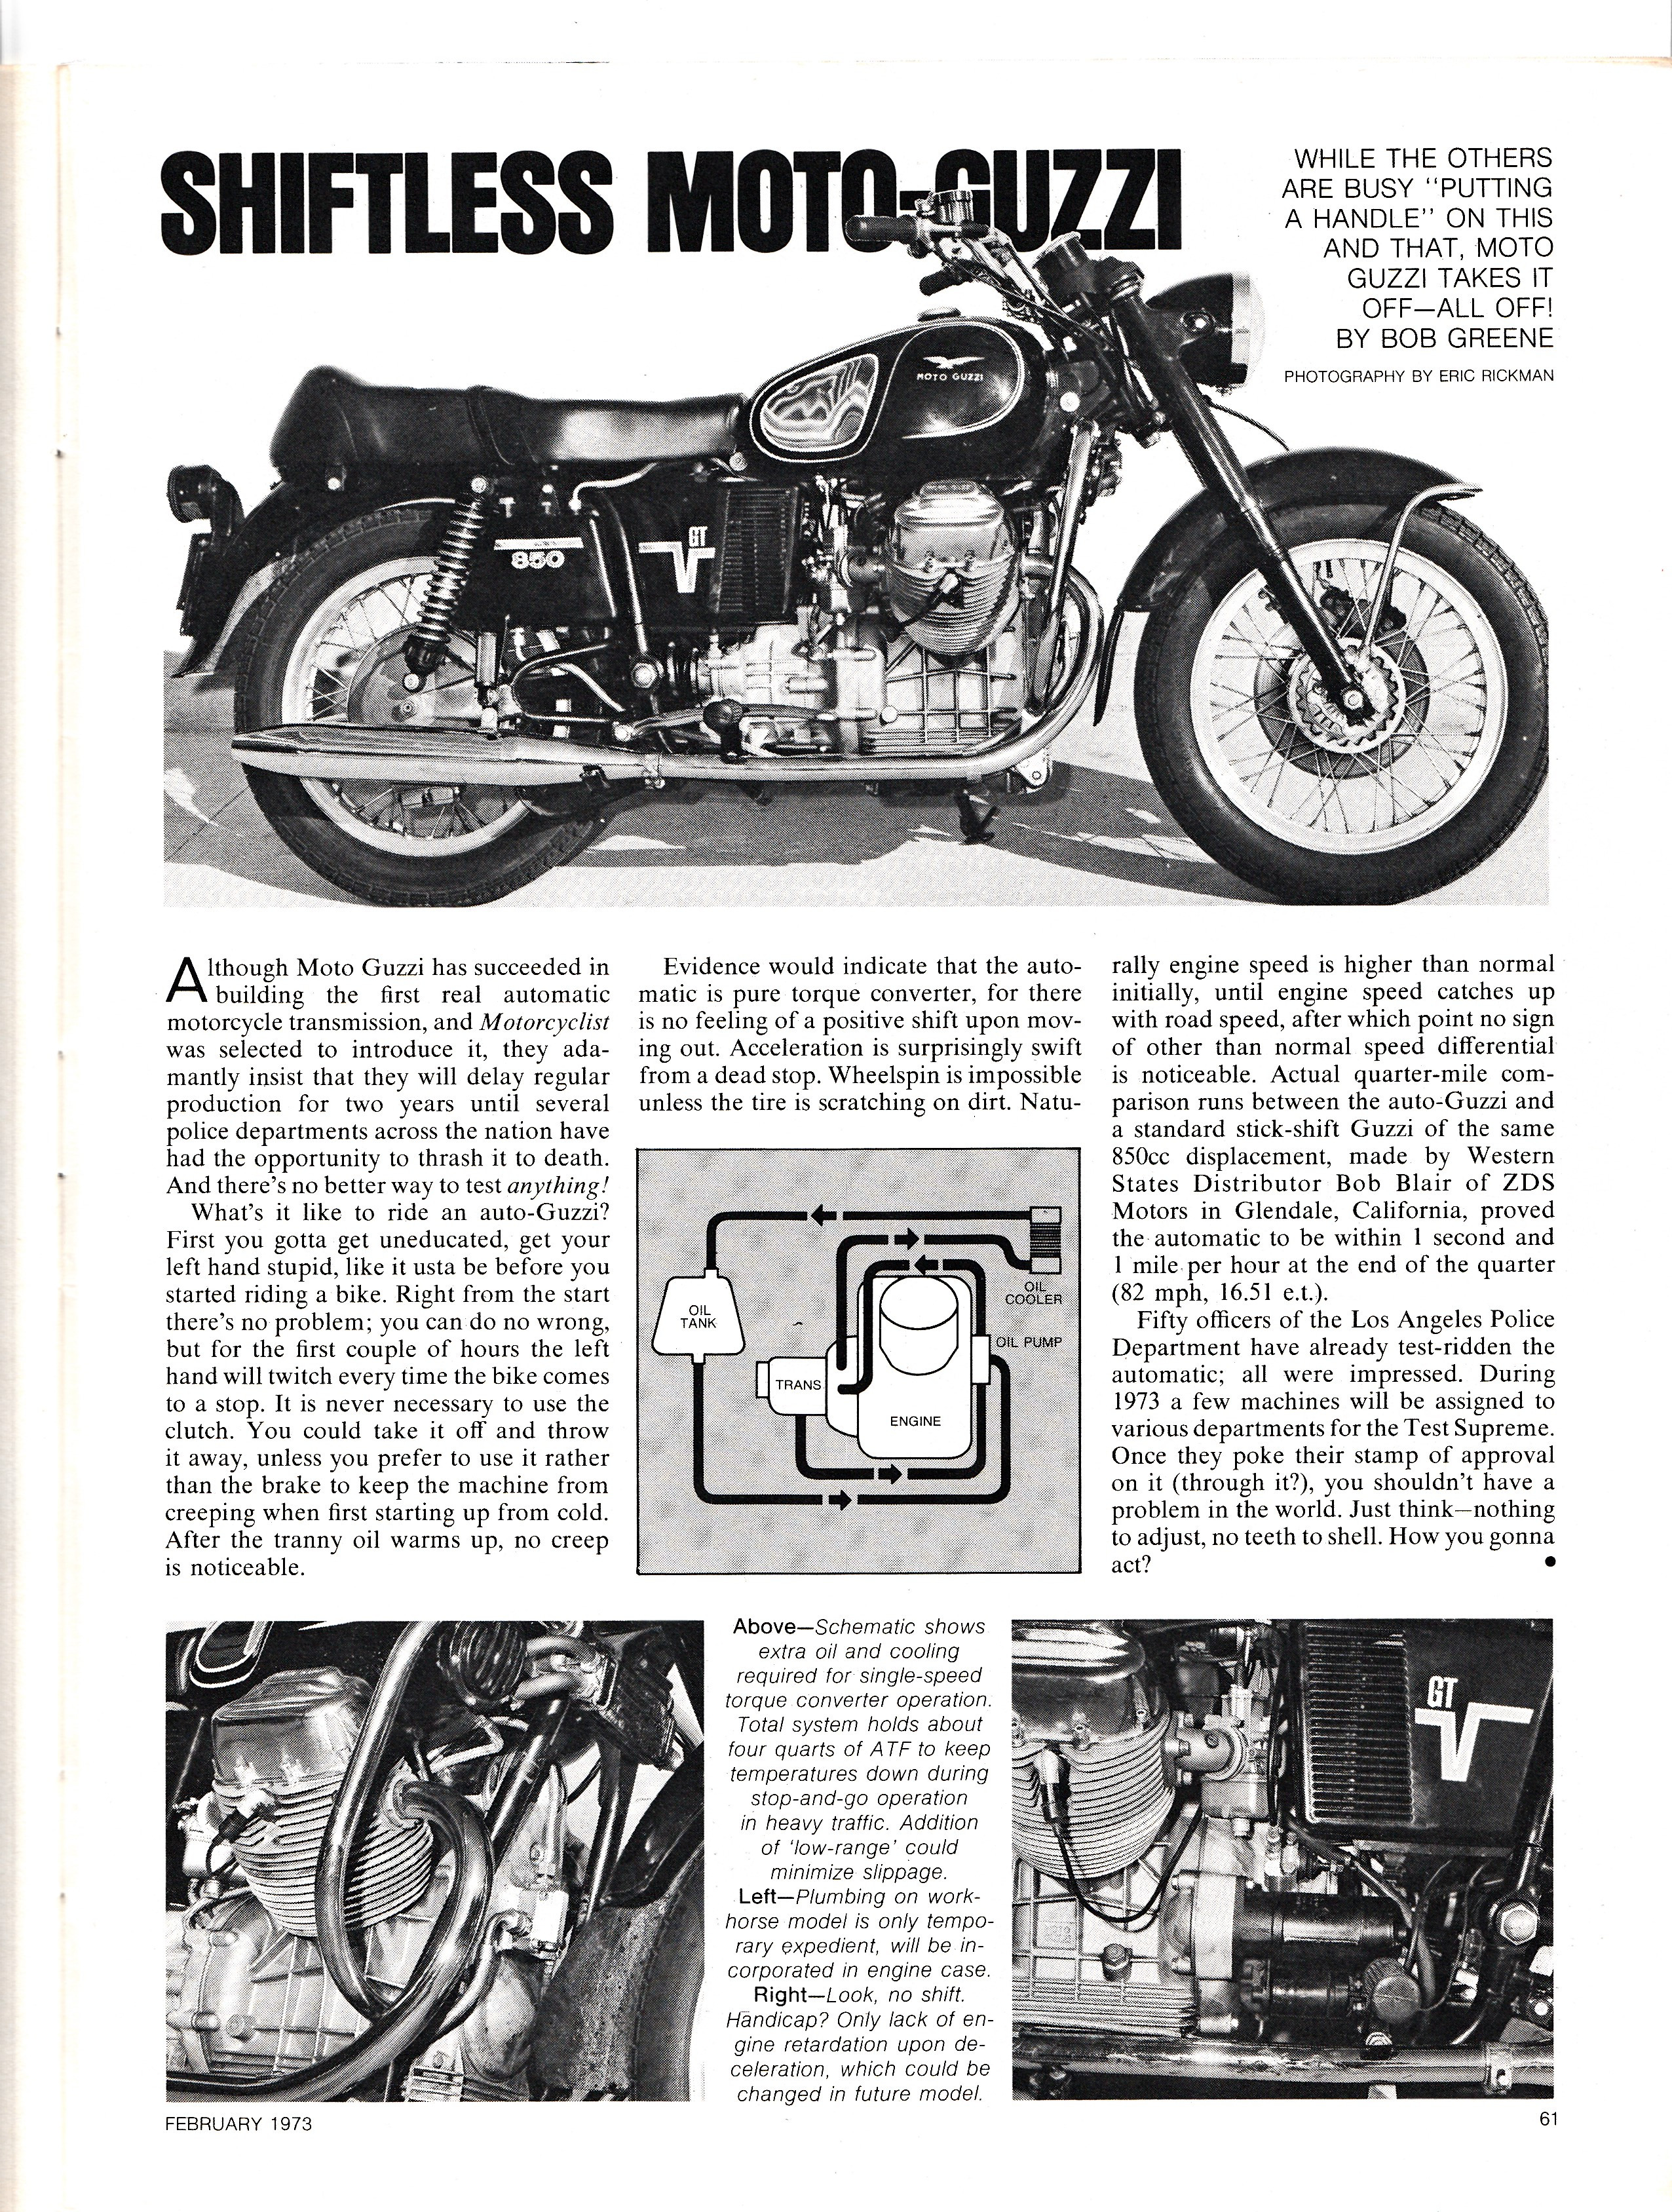 Article - Motorcyclist (1973 February) Shiftless Moto Guzzi. Early prototype of an I-Convert.